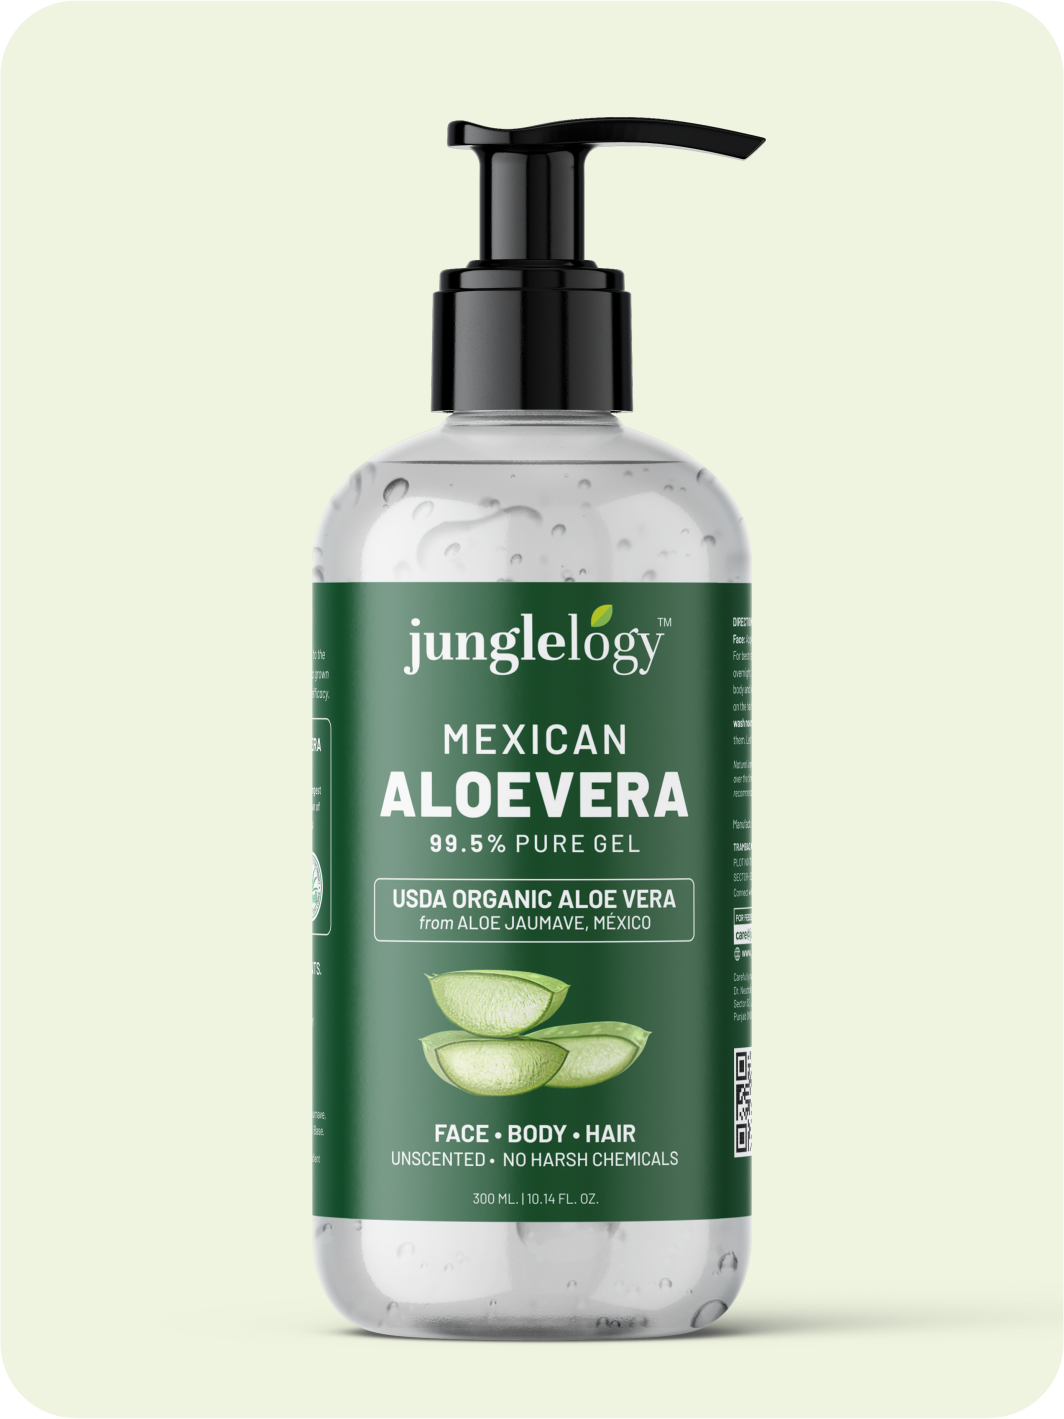 USDA Organic 99.5% Pure Aloe Vera Gel (Aloe Jaumave, Mexico)